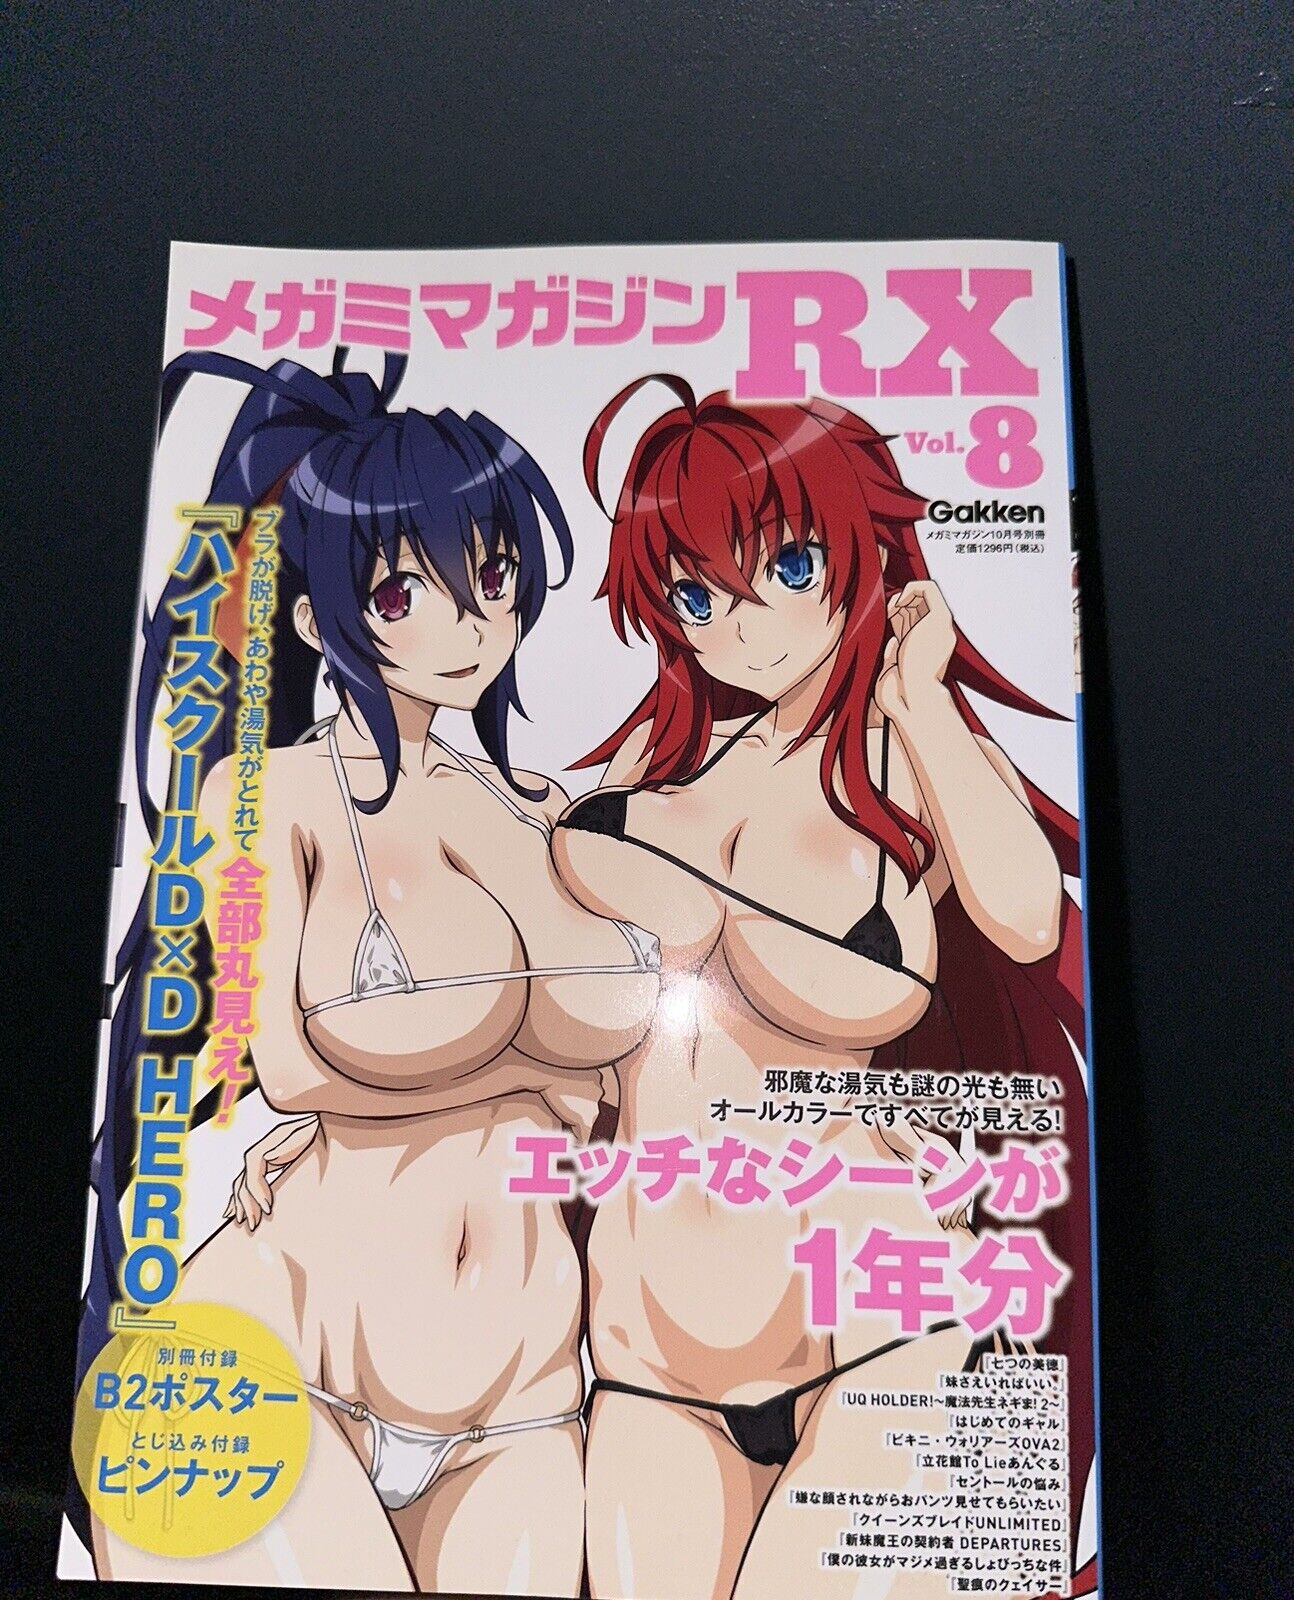 Megami MAGAZINE RX Vol. 8 October 2018 Issue High SchoolDxD (US, Ships Today)